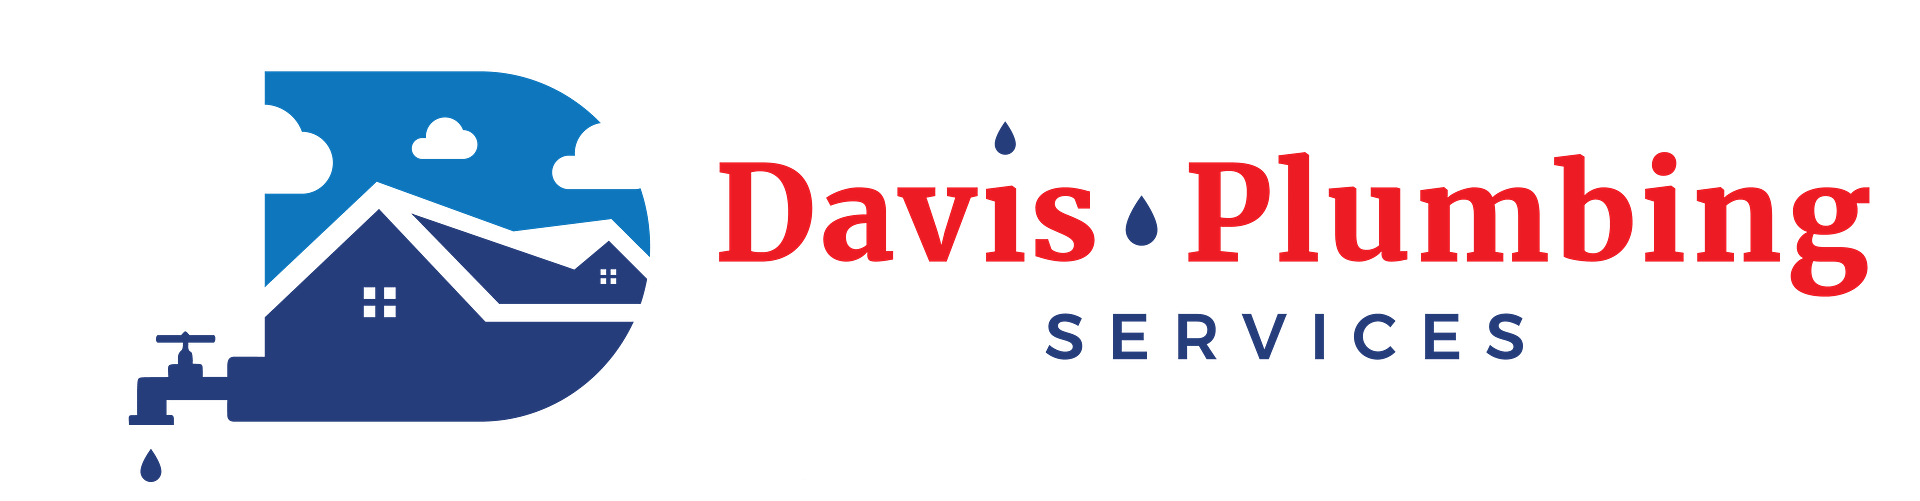 Davis Plumbing